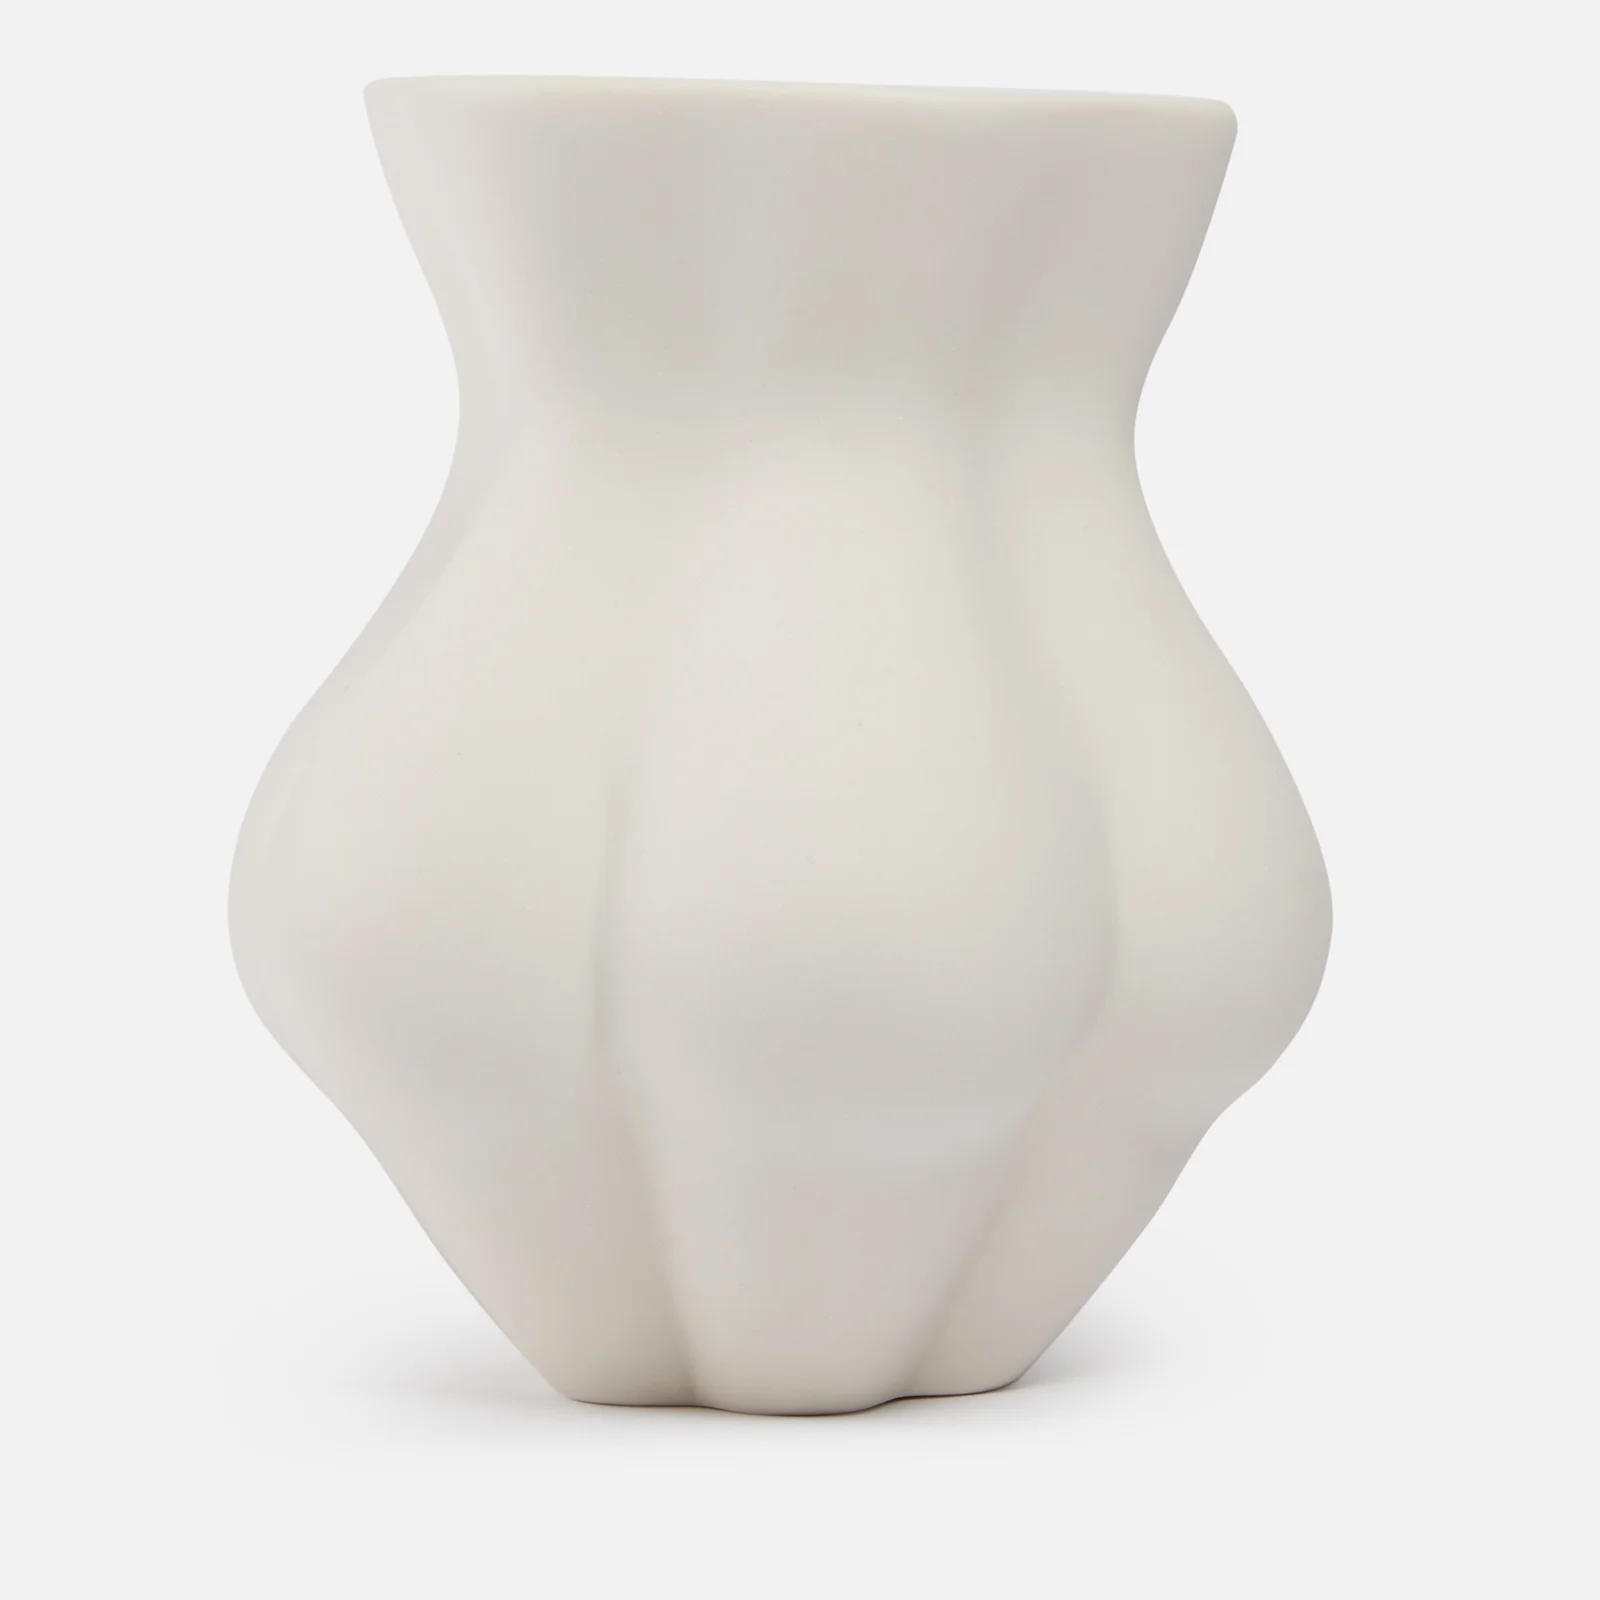 Jonathan Adler Kiki's Derriere Vase Image 1